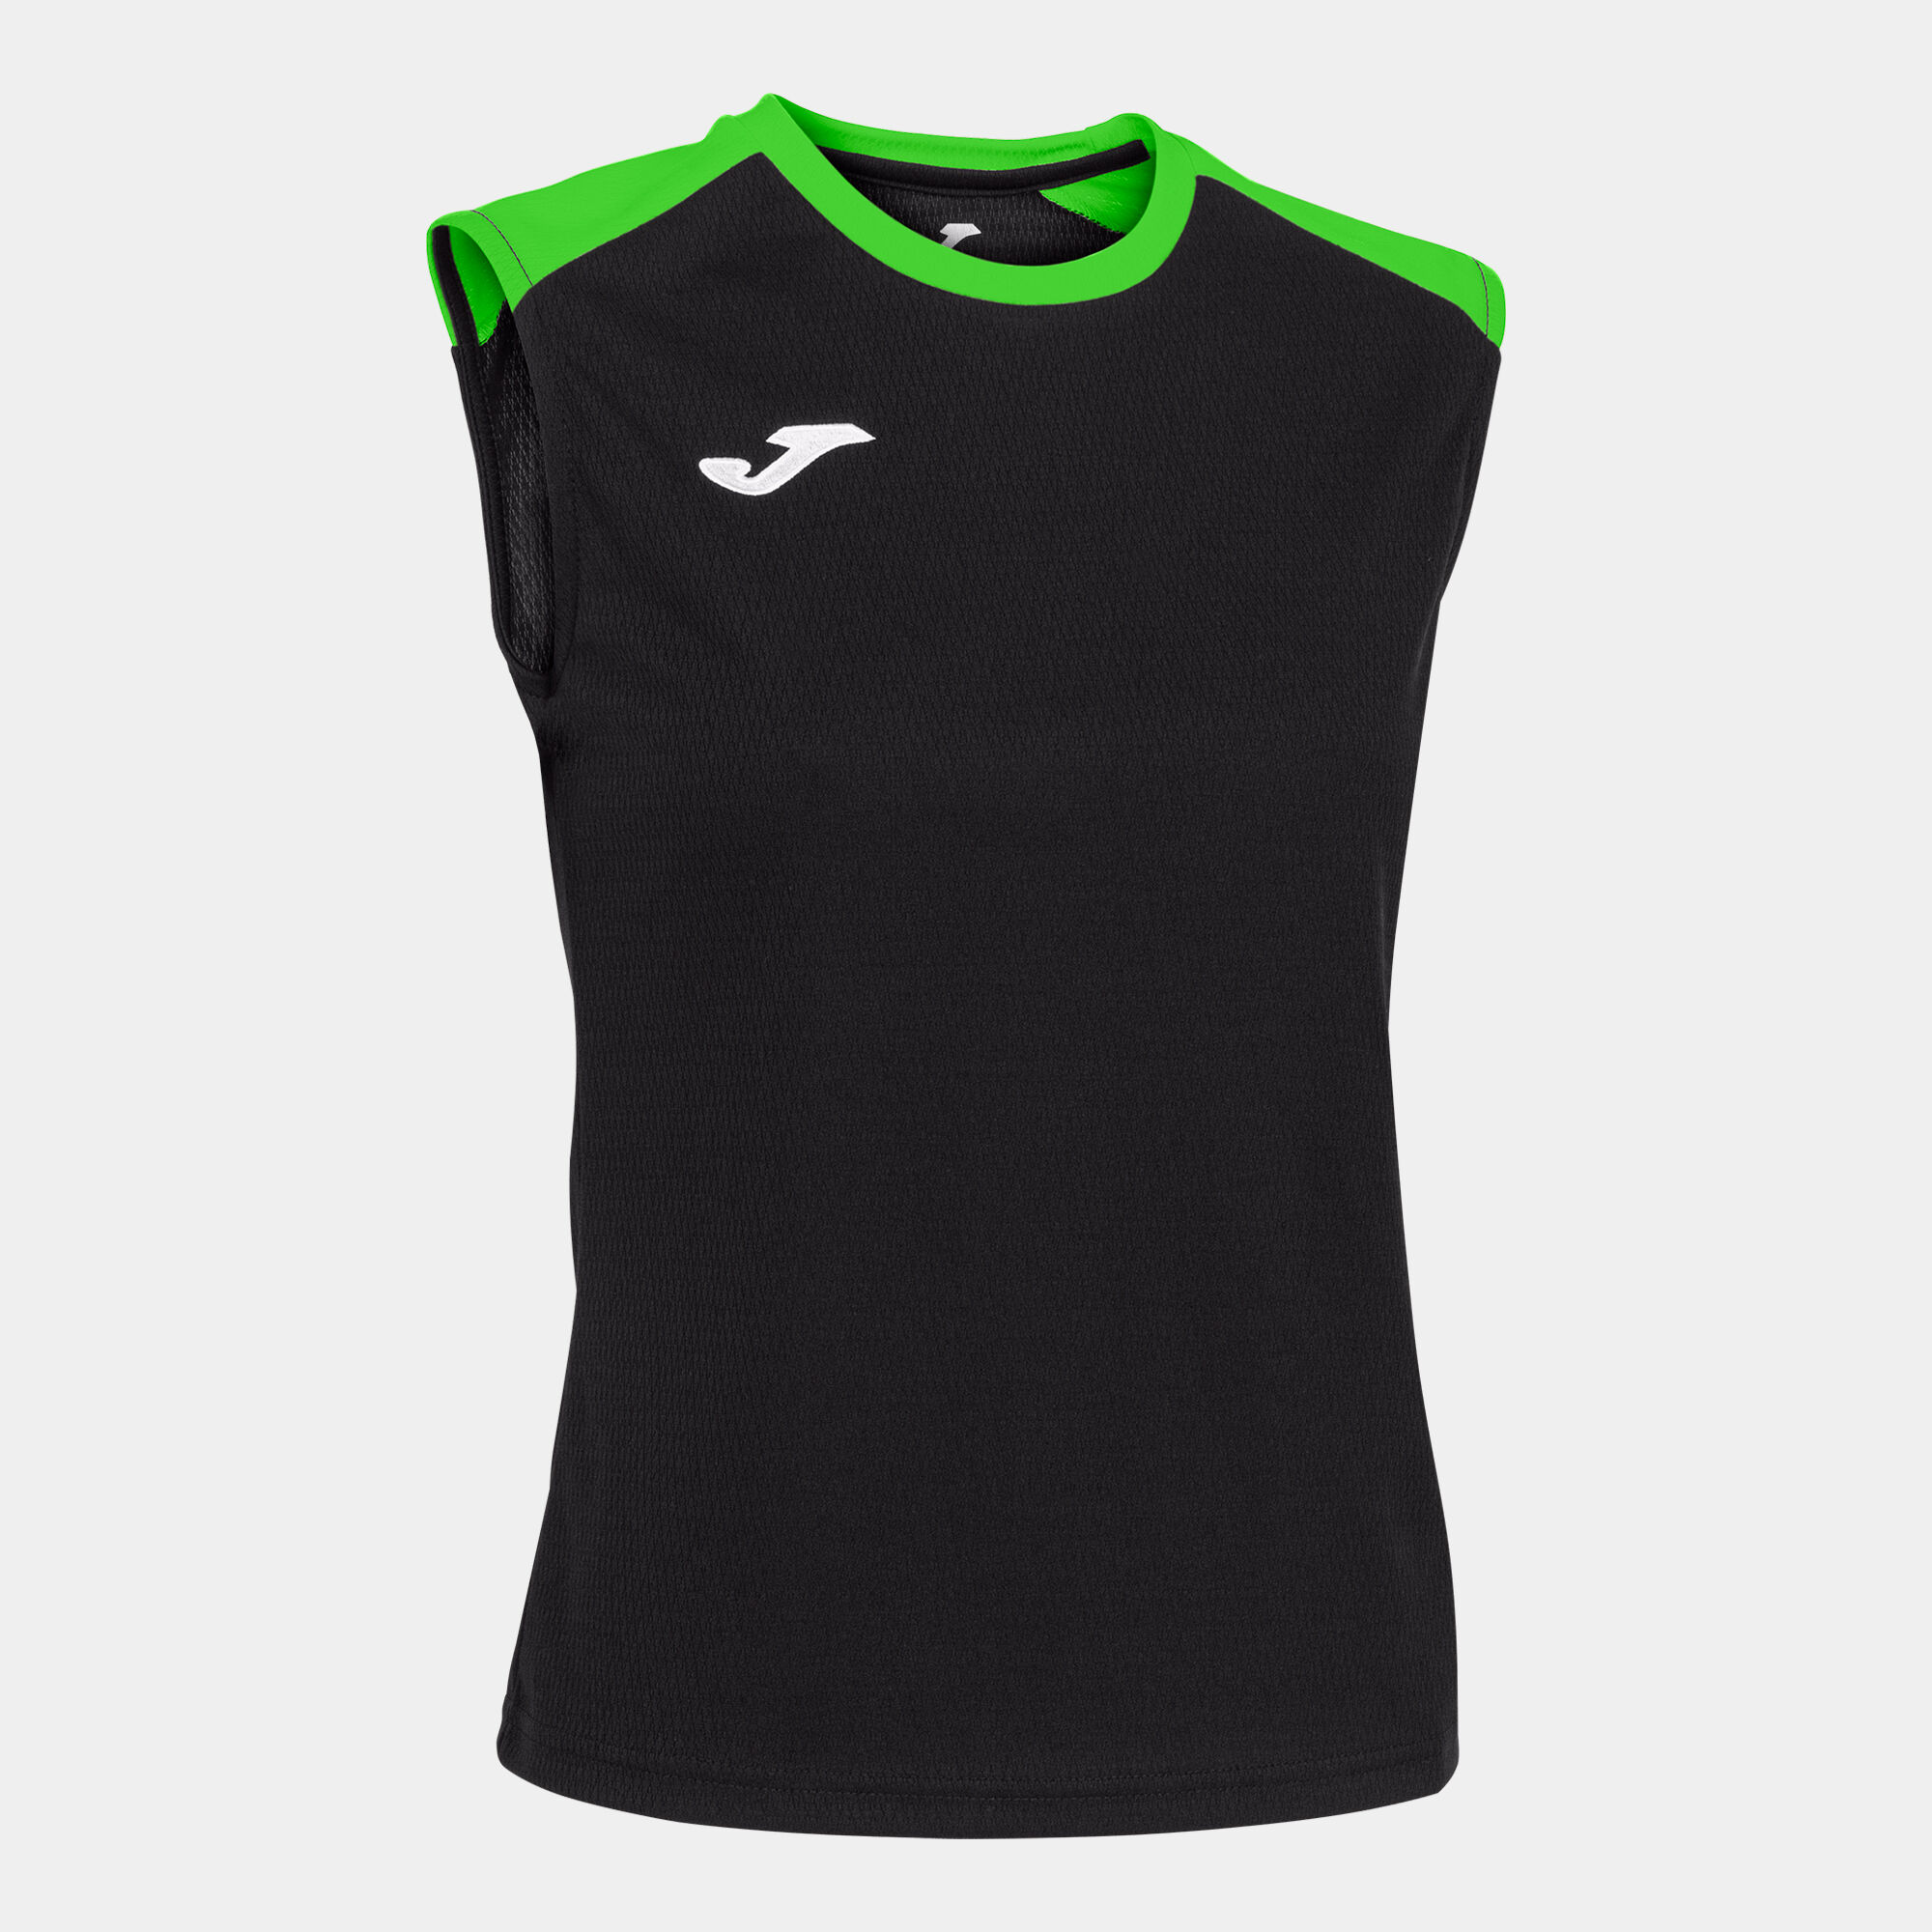 Camiseta tirantes mujer Eco Championship negro verde flúor